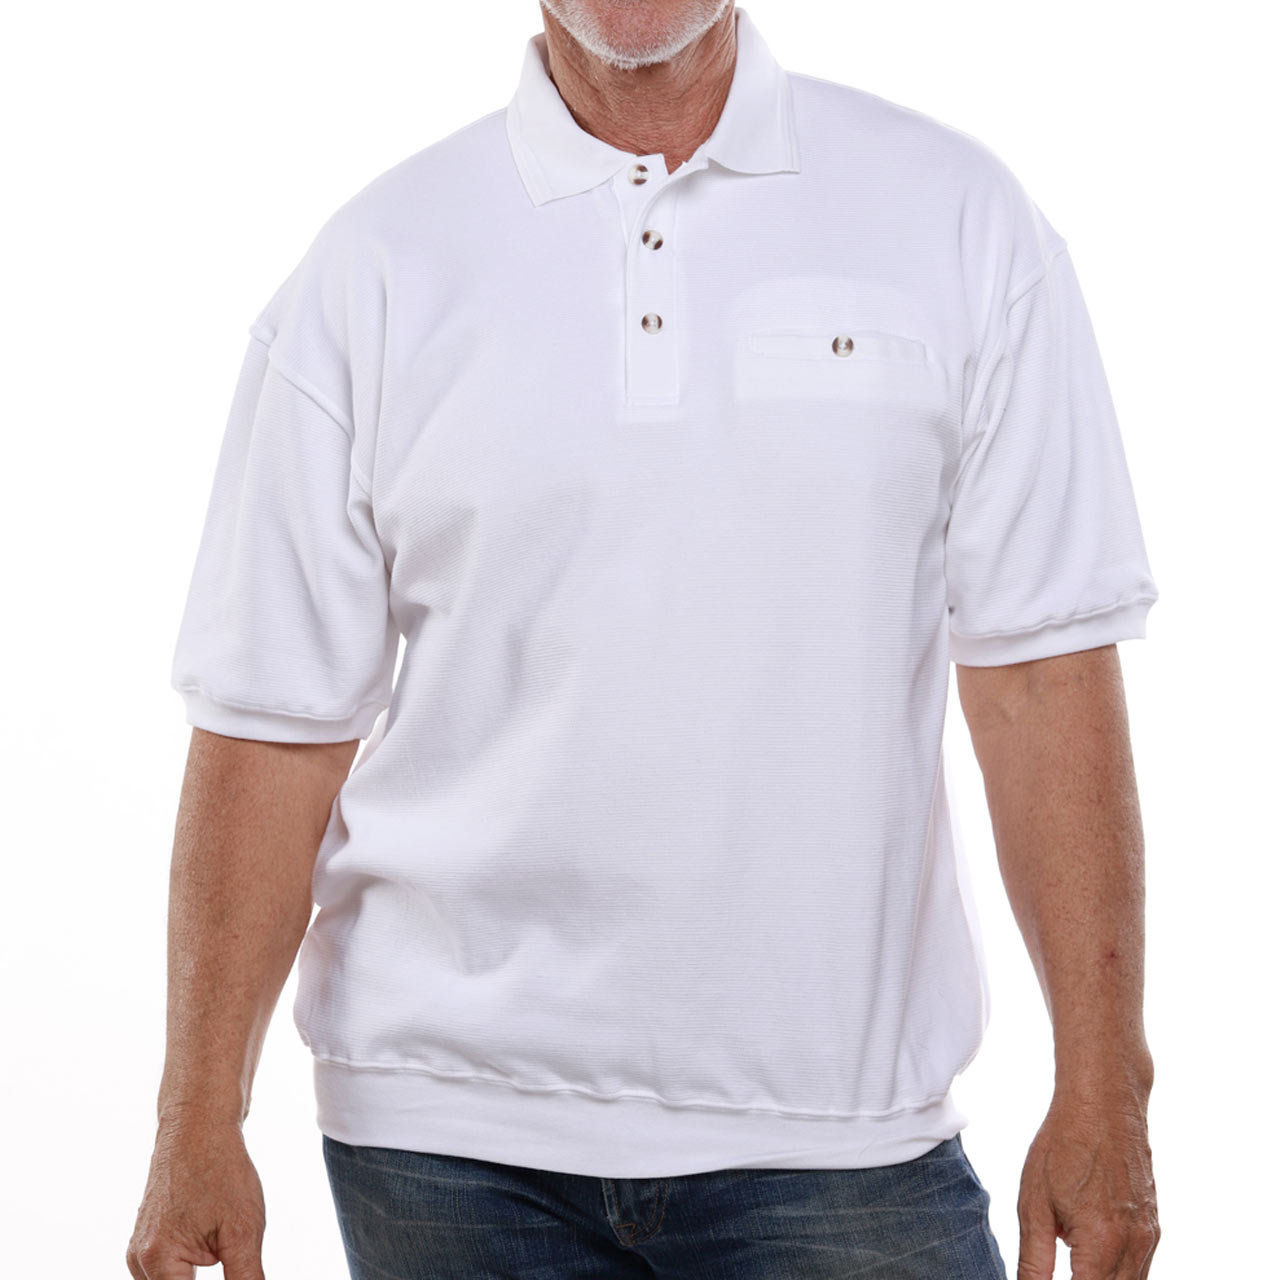 Men's Classics By Palmland Short Sleeve Polo Knit Banded Bottom Shirt #6070-100 White